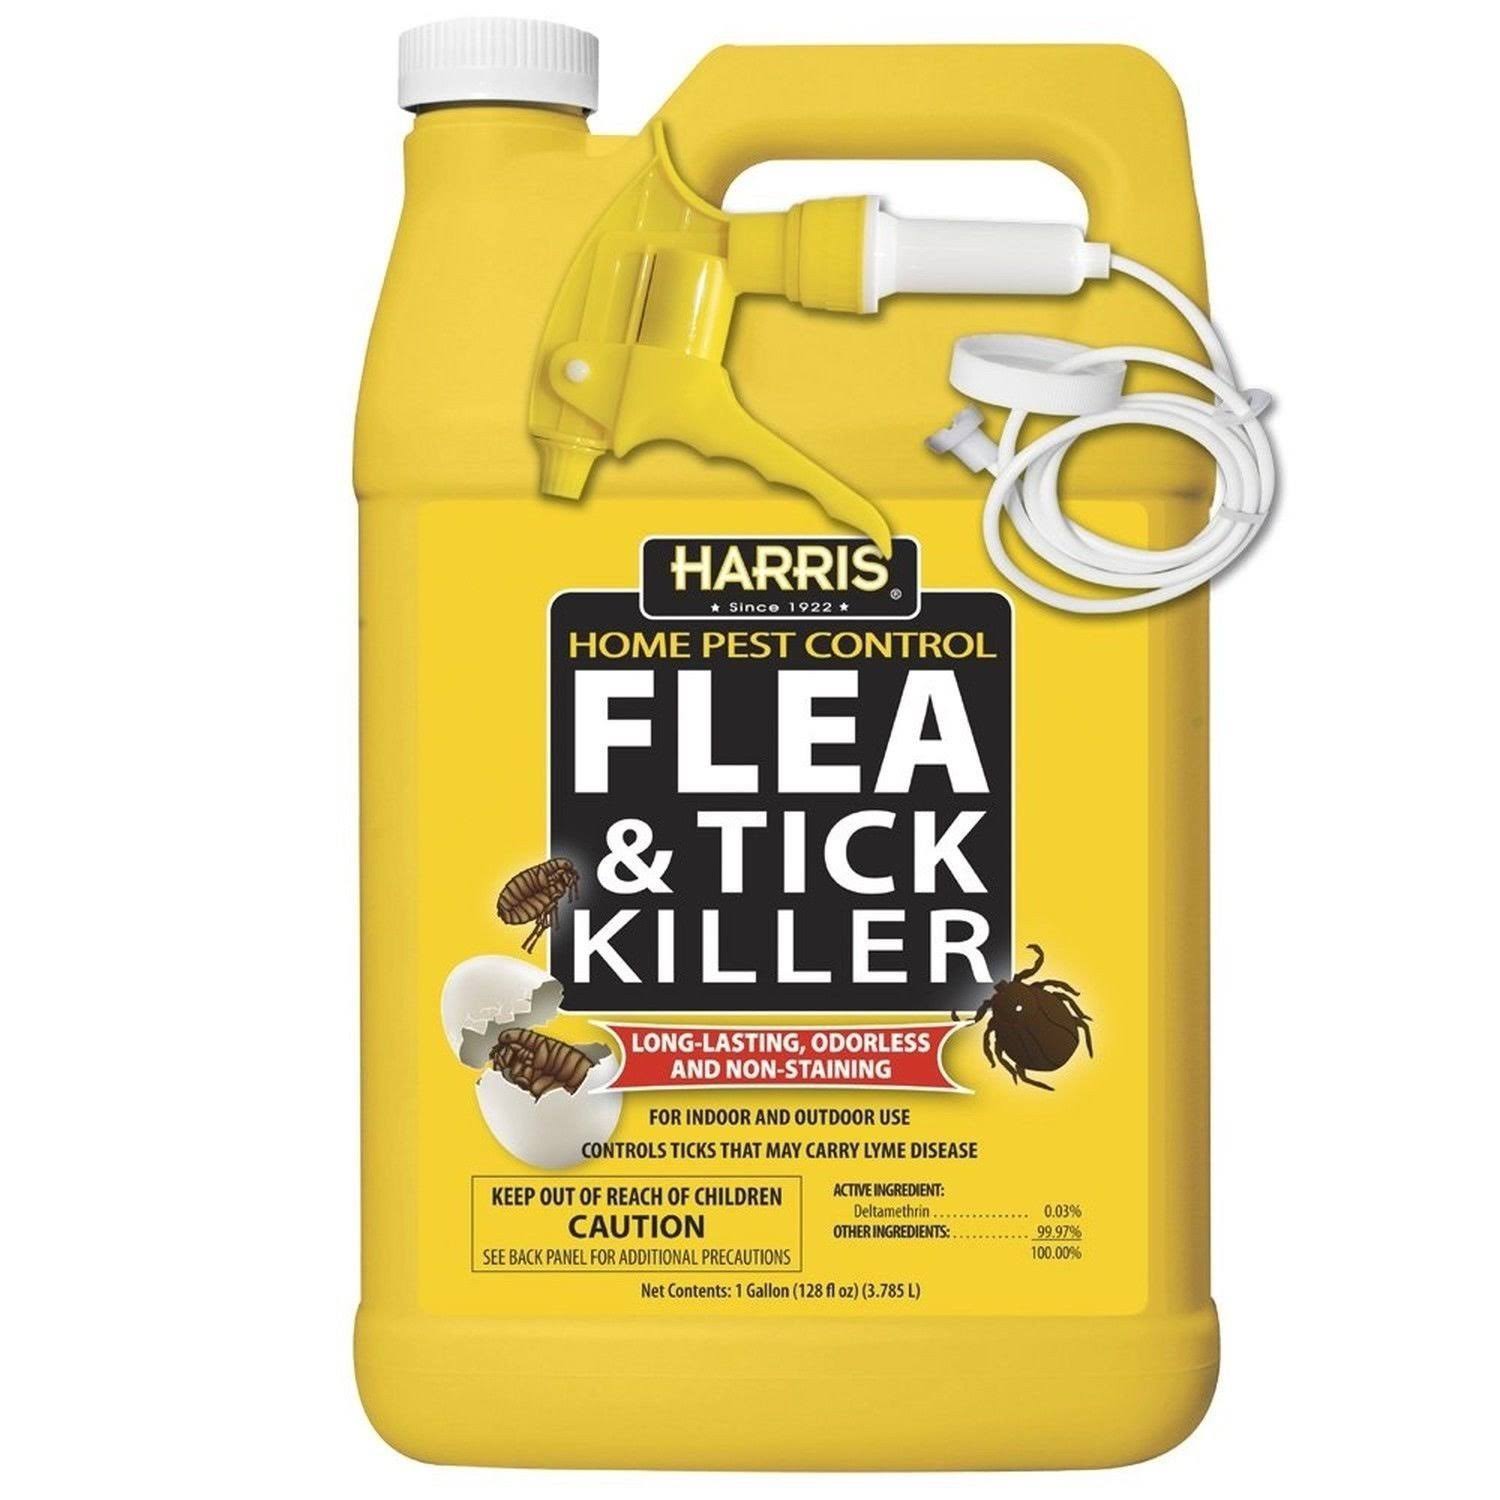 Harris Flea & Tick Killer